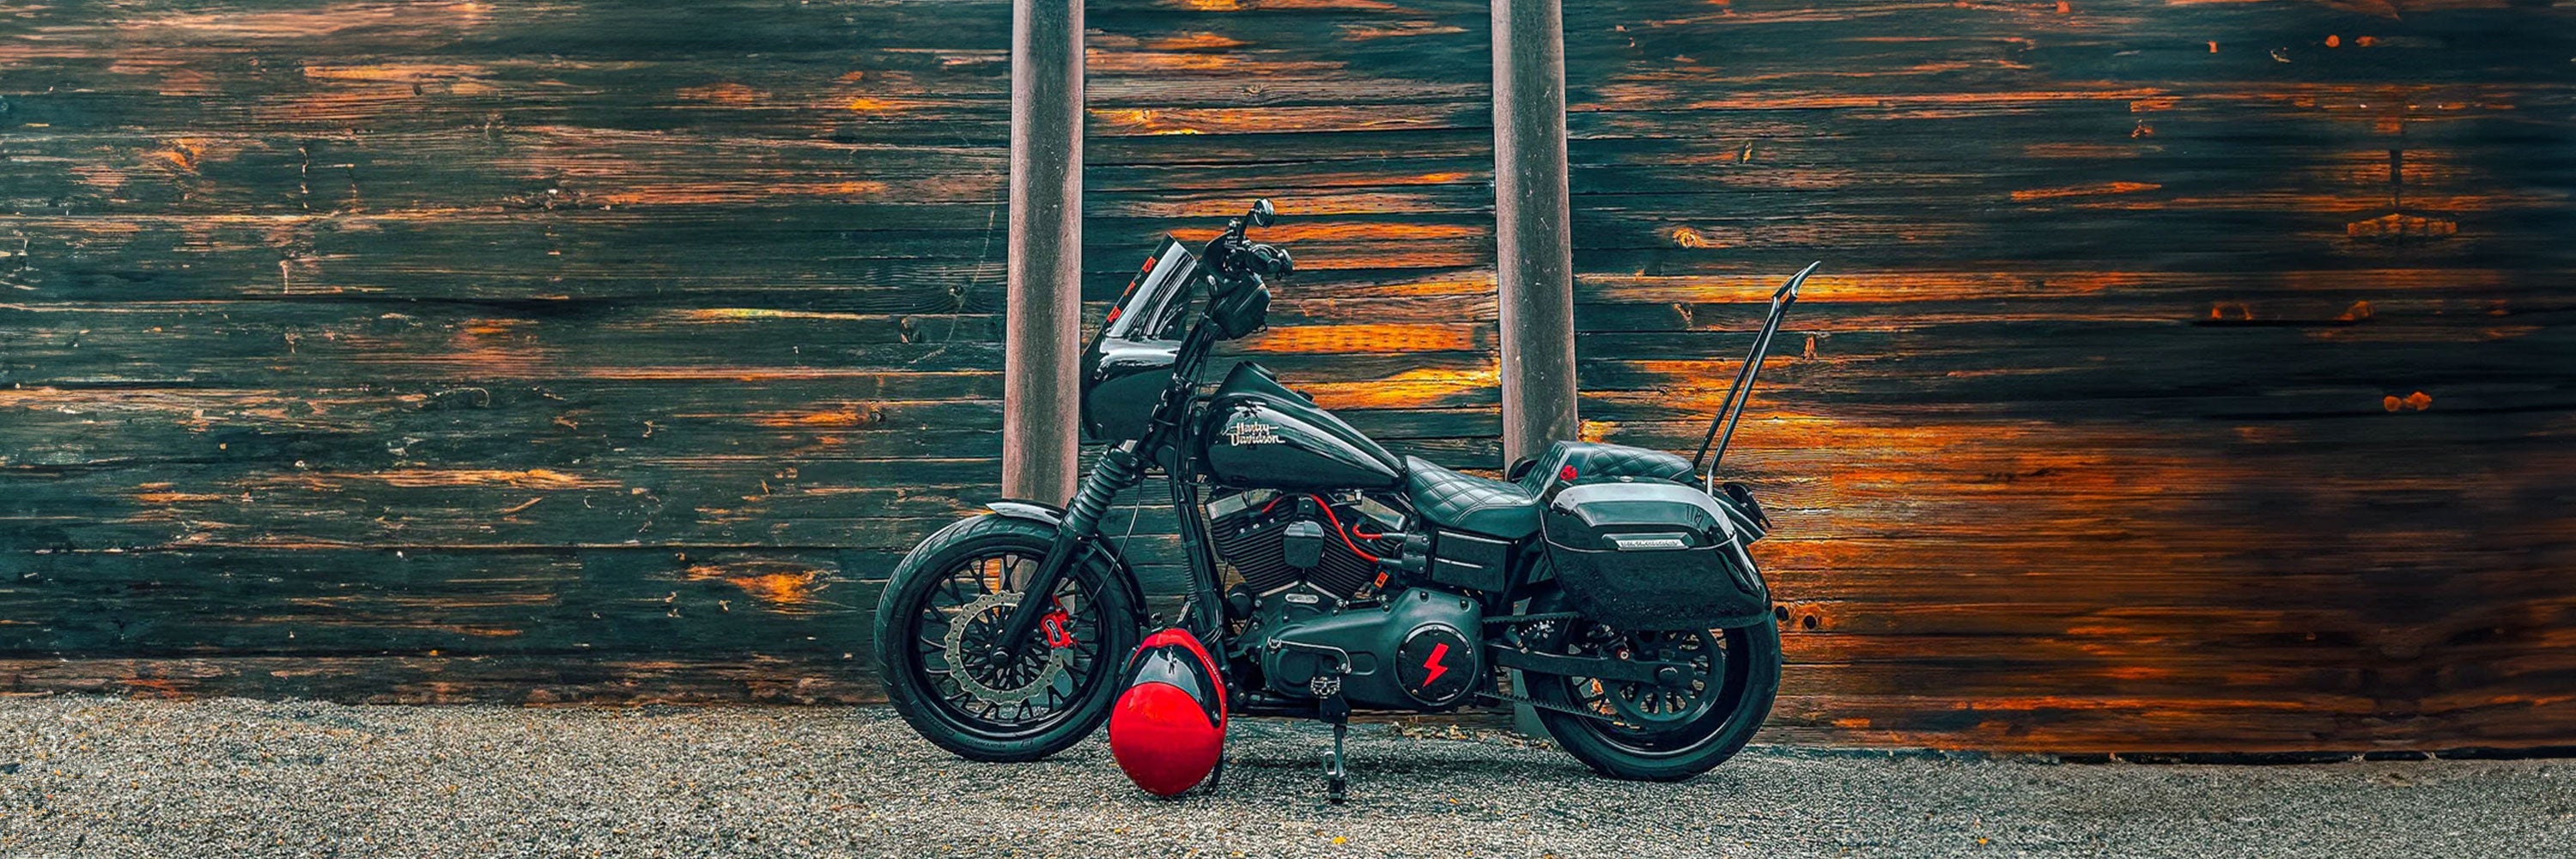 Harley Davidson Dyna Hard Saddlebags